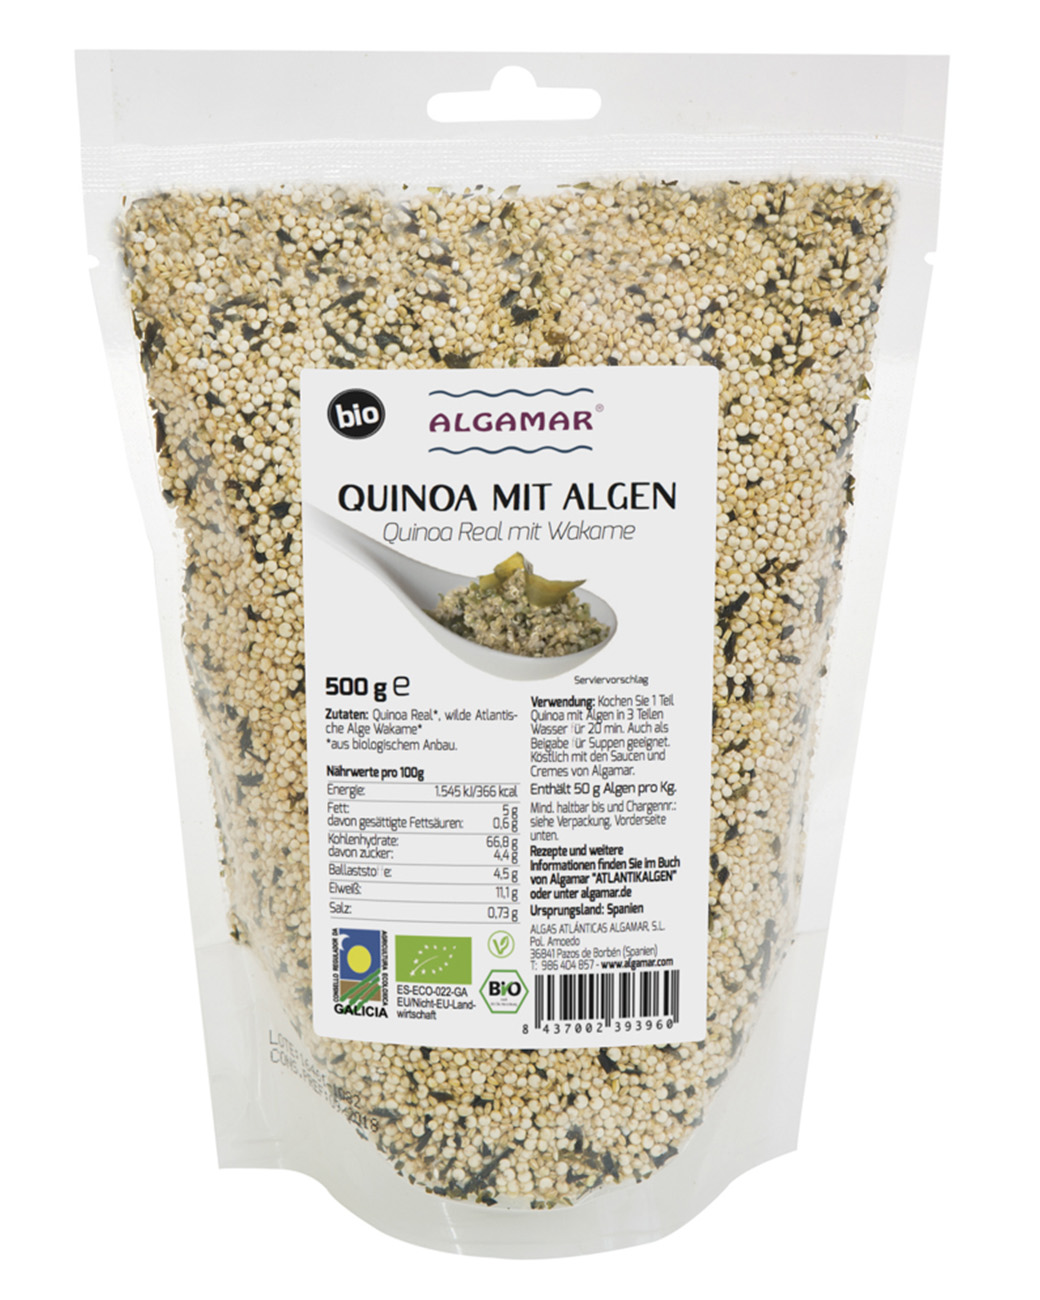 29-algamar-quinoa-algas-500g-alemania